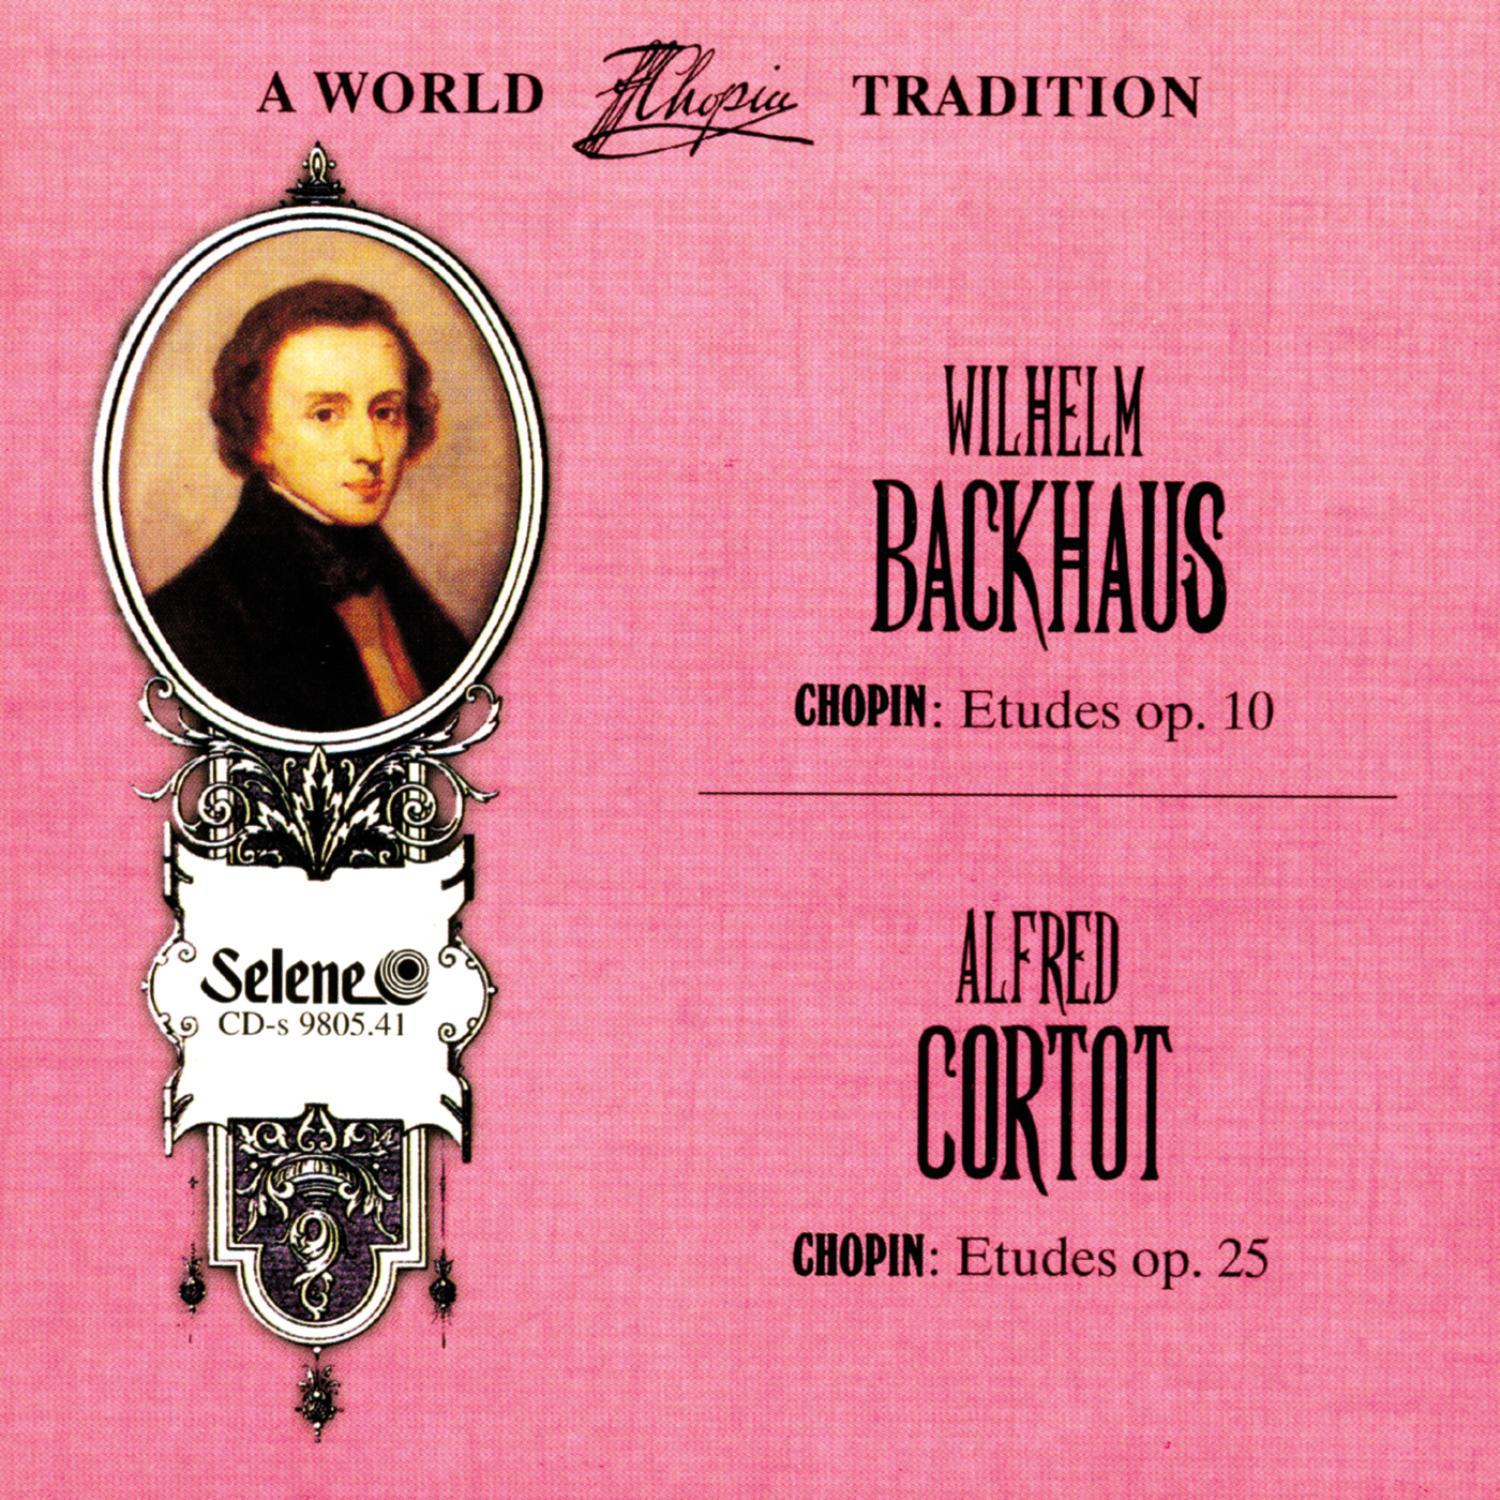 The Great Polish Chopin Tradition: Wilhelm Backhaus, Alfred Cortot